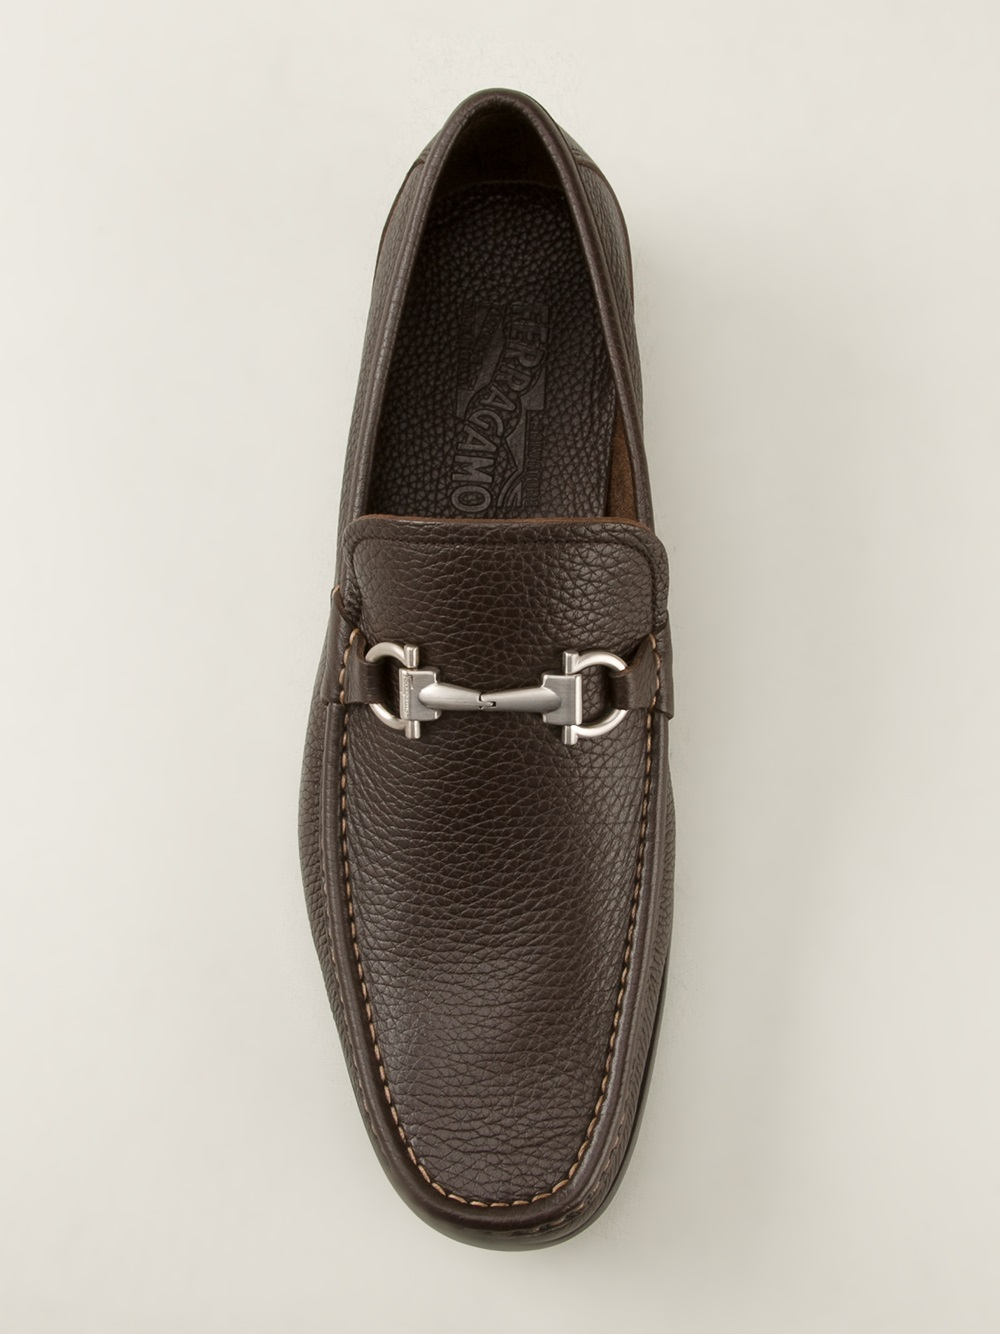 Lyst - Ferragamo Classic Loafer in Brown for Men